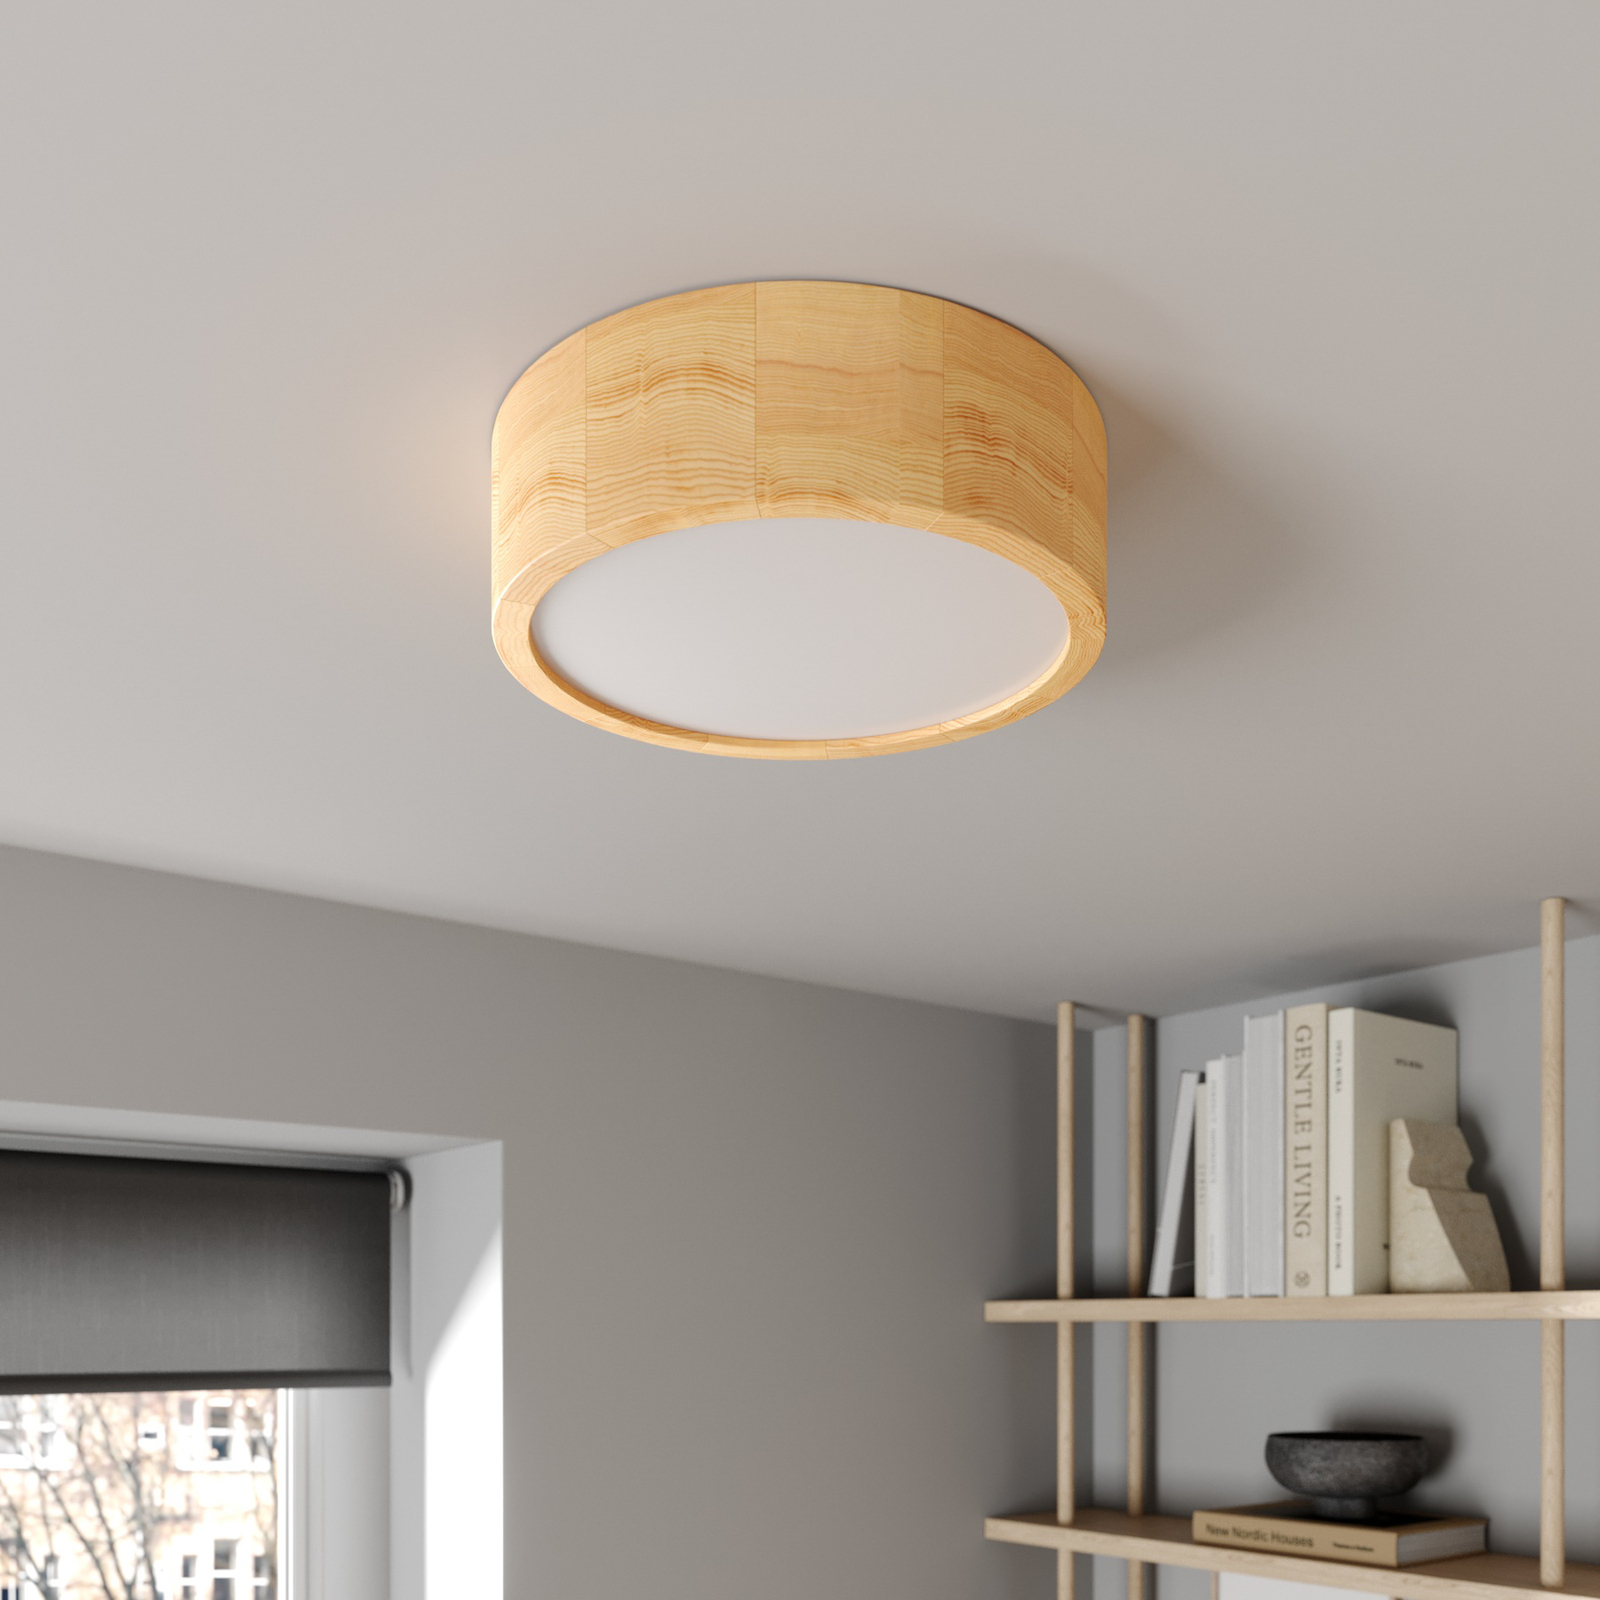 Cleo ceiling light made of pine wood, Ø 27.5 cm